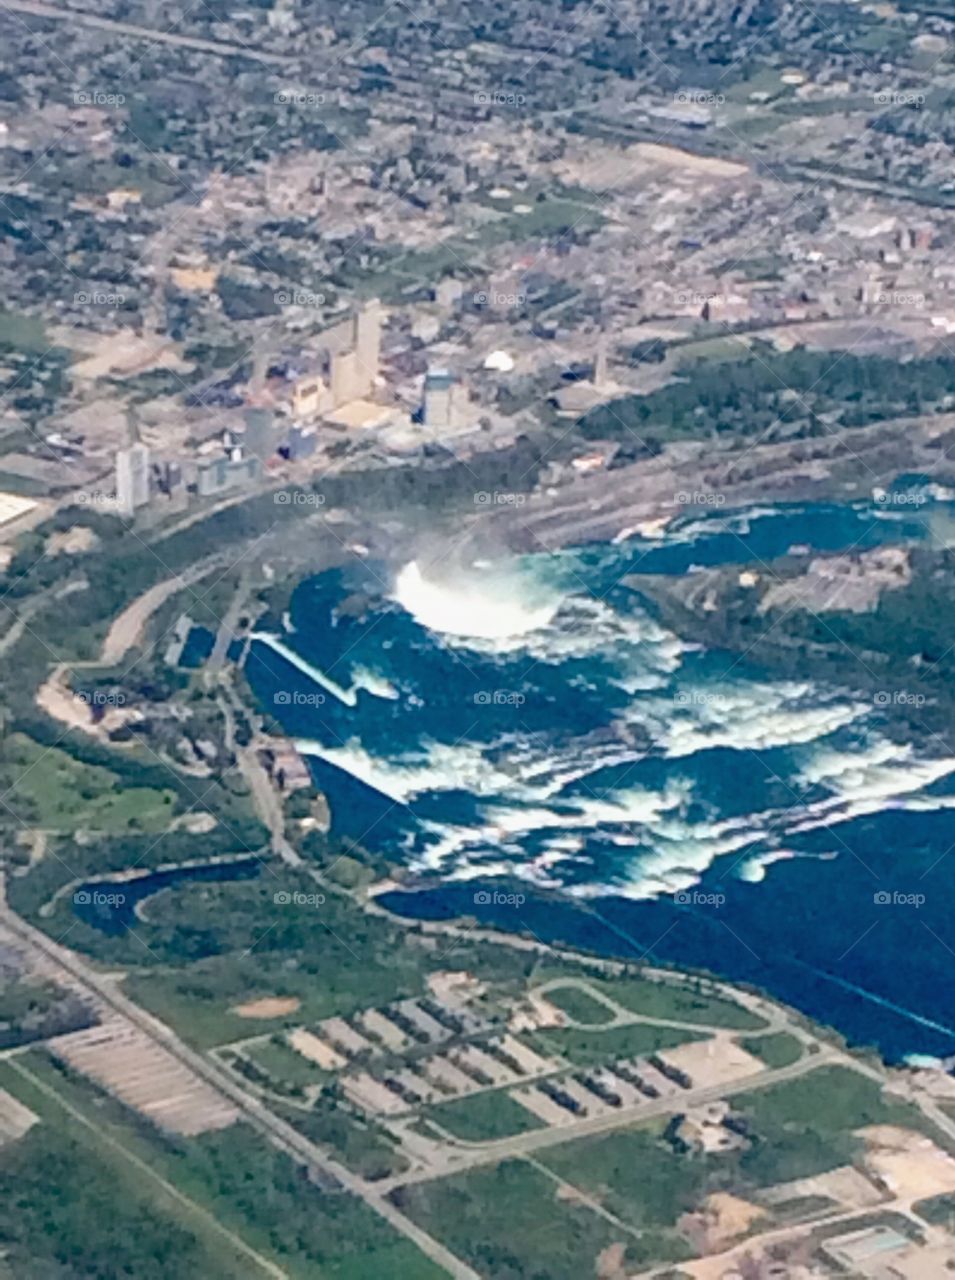 Niagara Falls from the plane